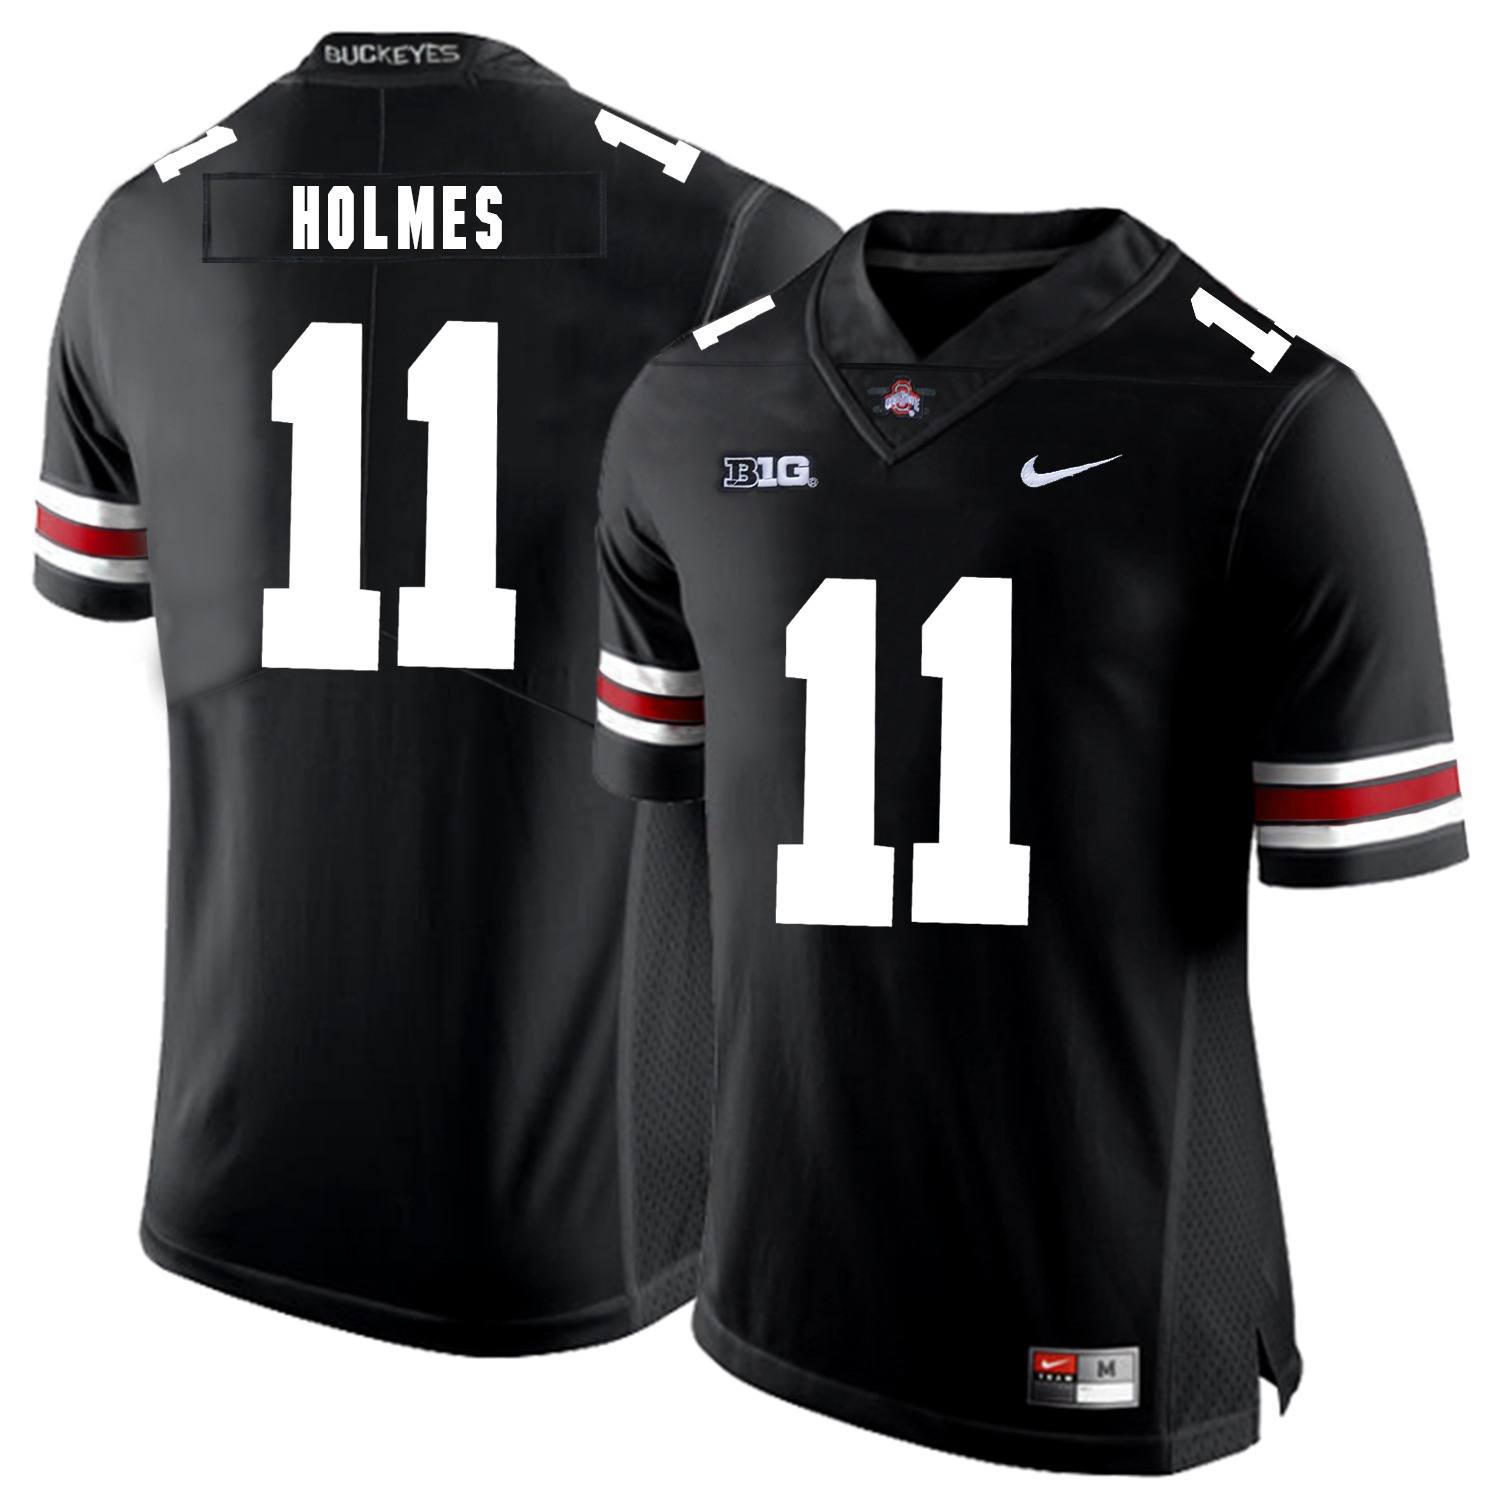 Ohio State Buckeyes 11 Jalyn Holmes Black Nike College Football Jersey